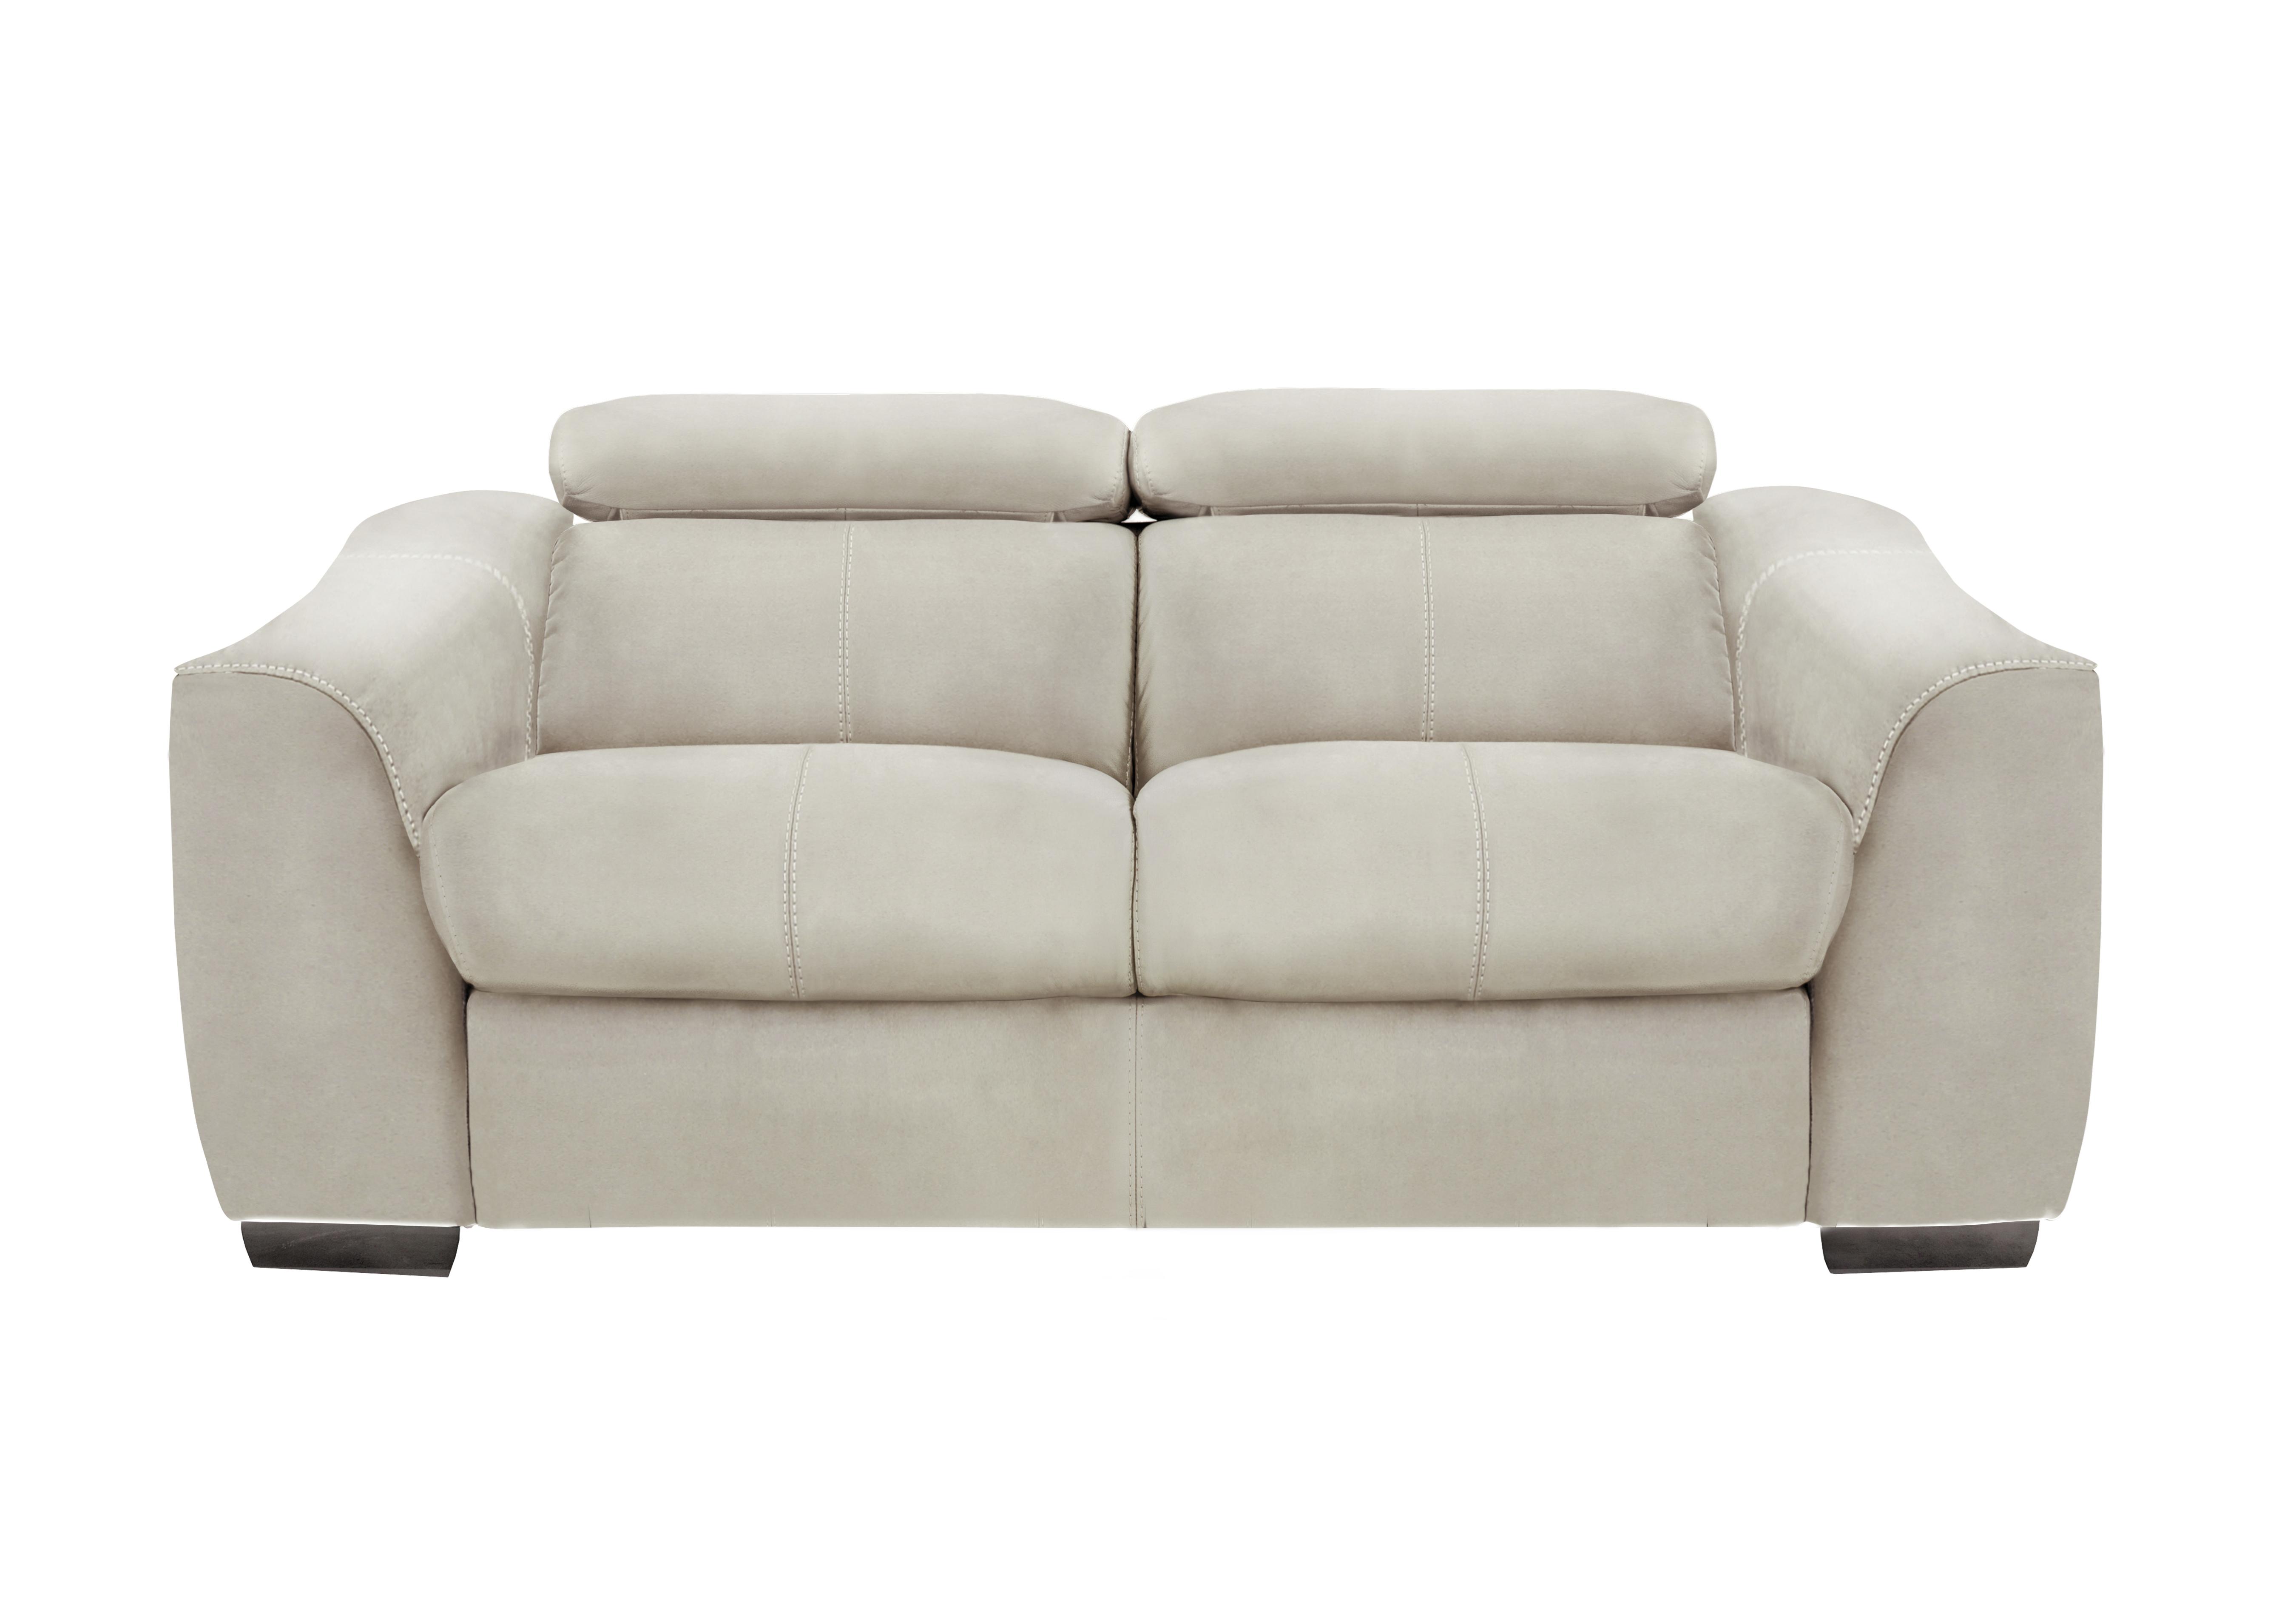 Elixir 2 Seater Fabric Sofa in Bfa-Blj-R20 Bisque on Furniture Village